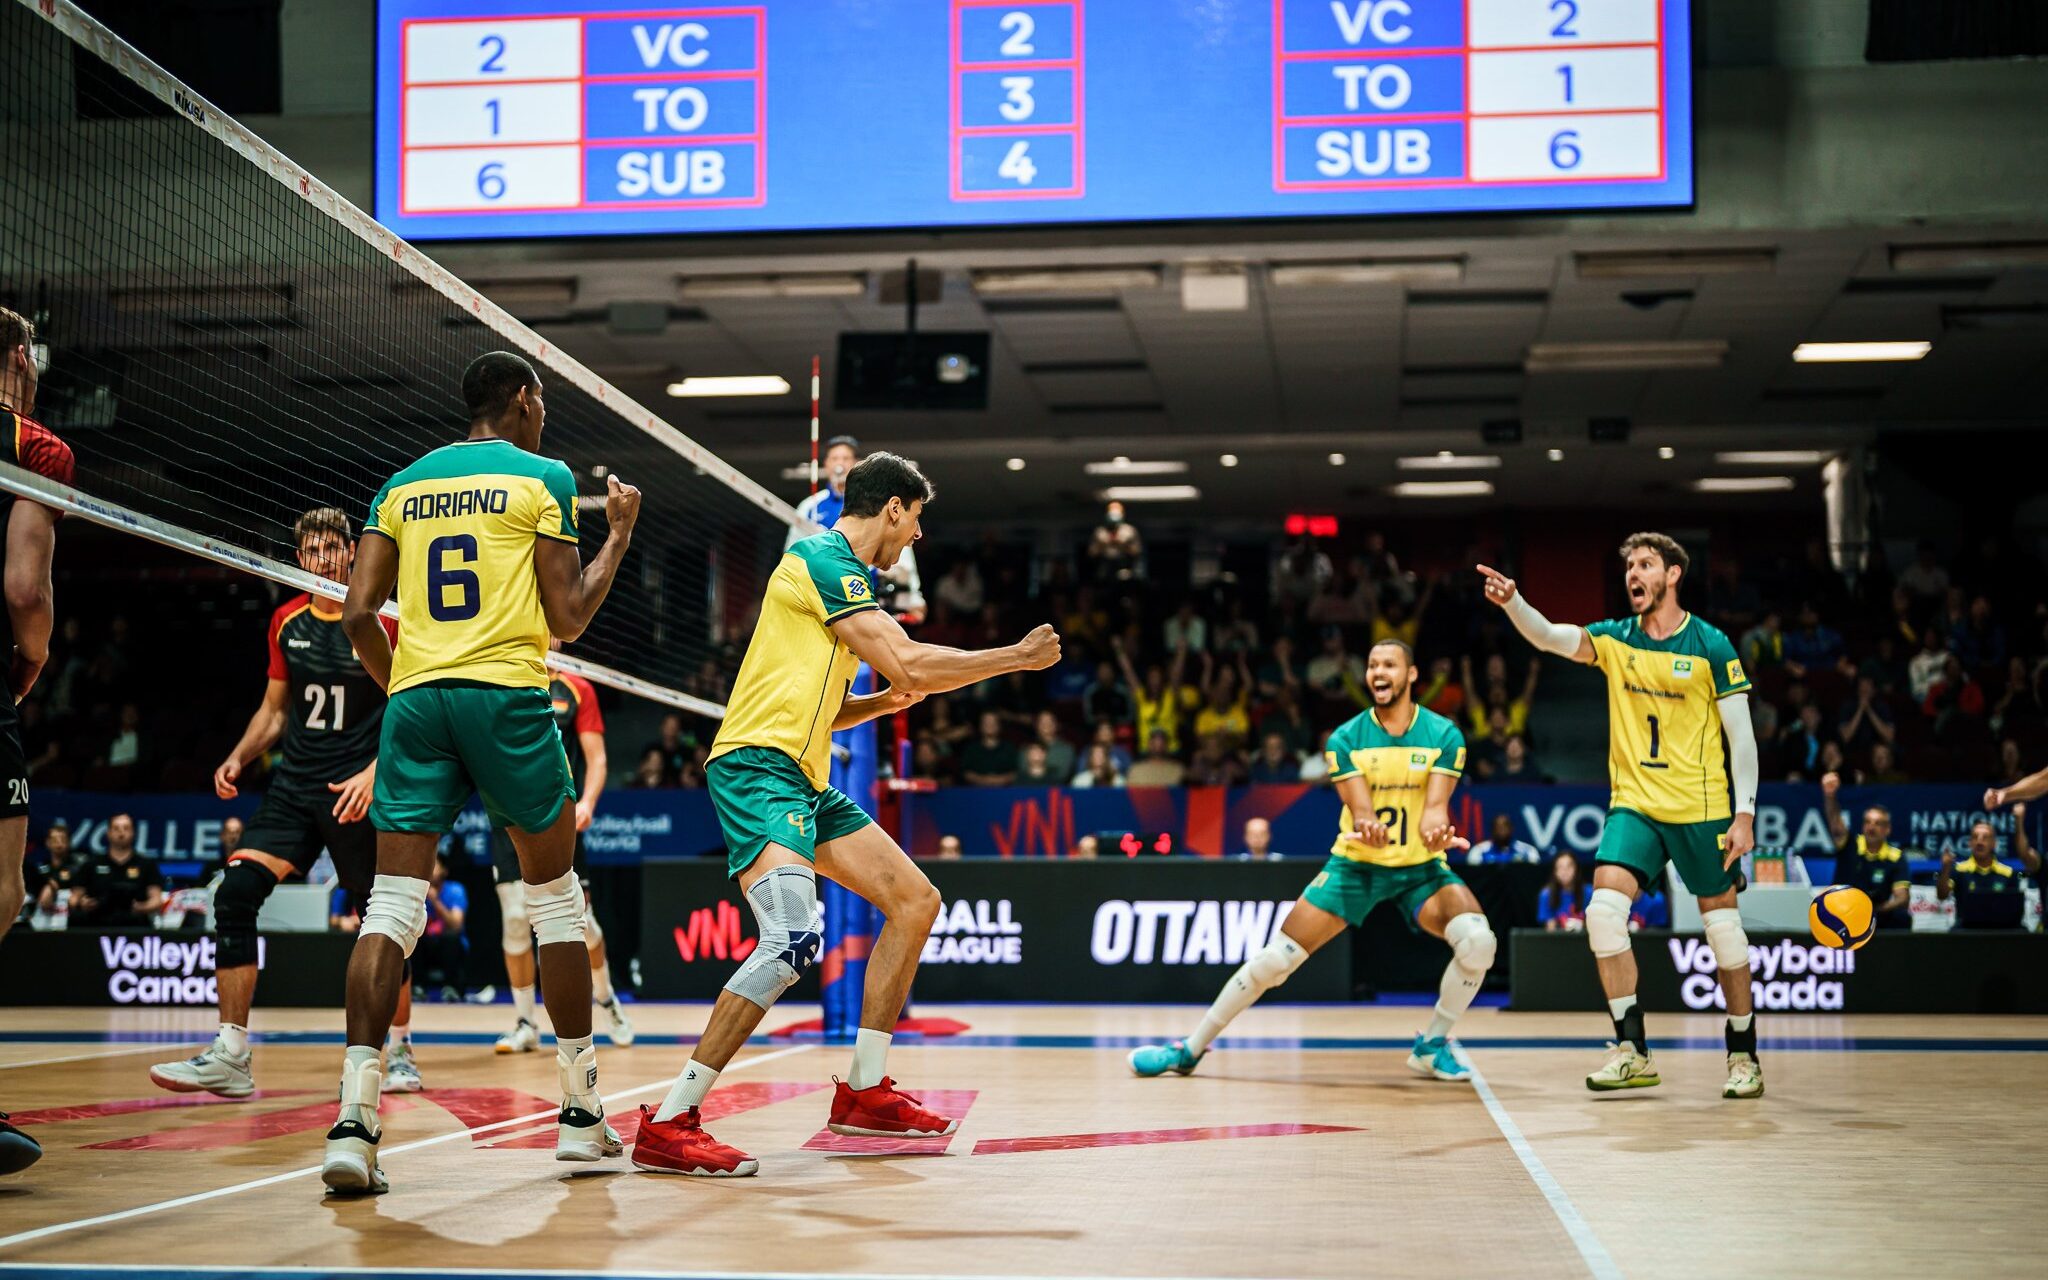 Vôlei masculino: Brasil reage, mas perde para Japão no tie-break